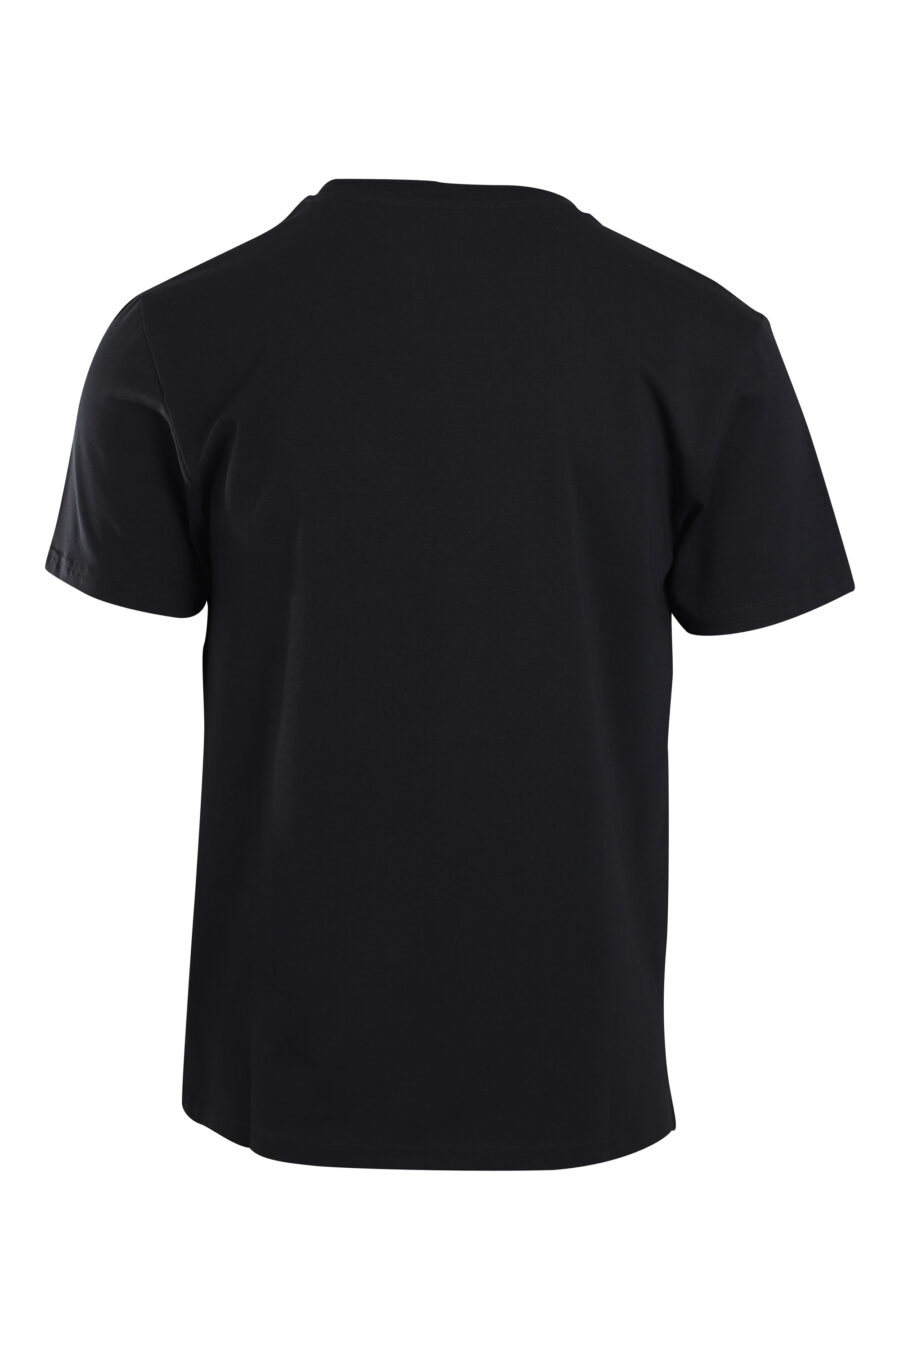 Black T-shirt with mini logo "swim" - IMG 2184